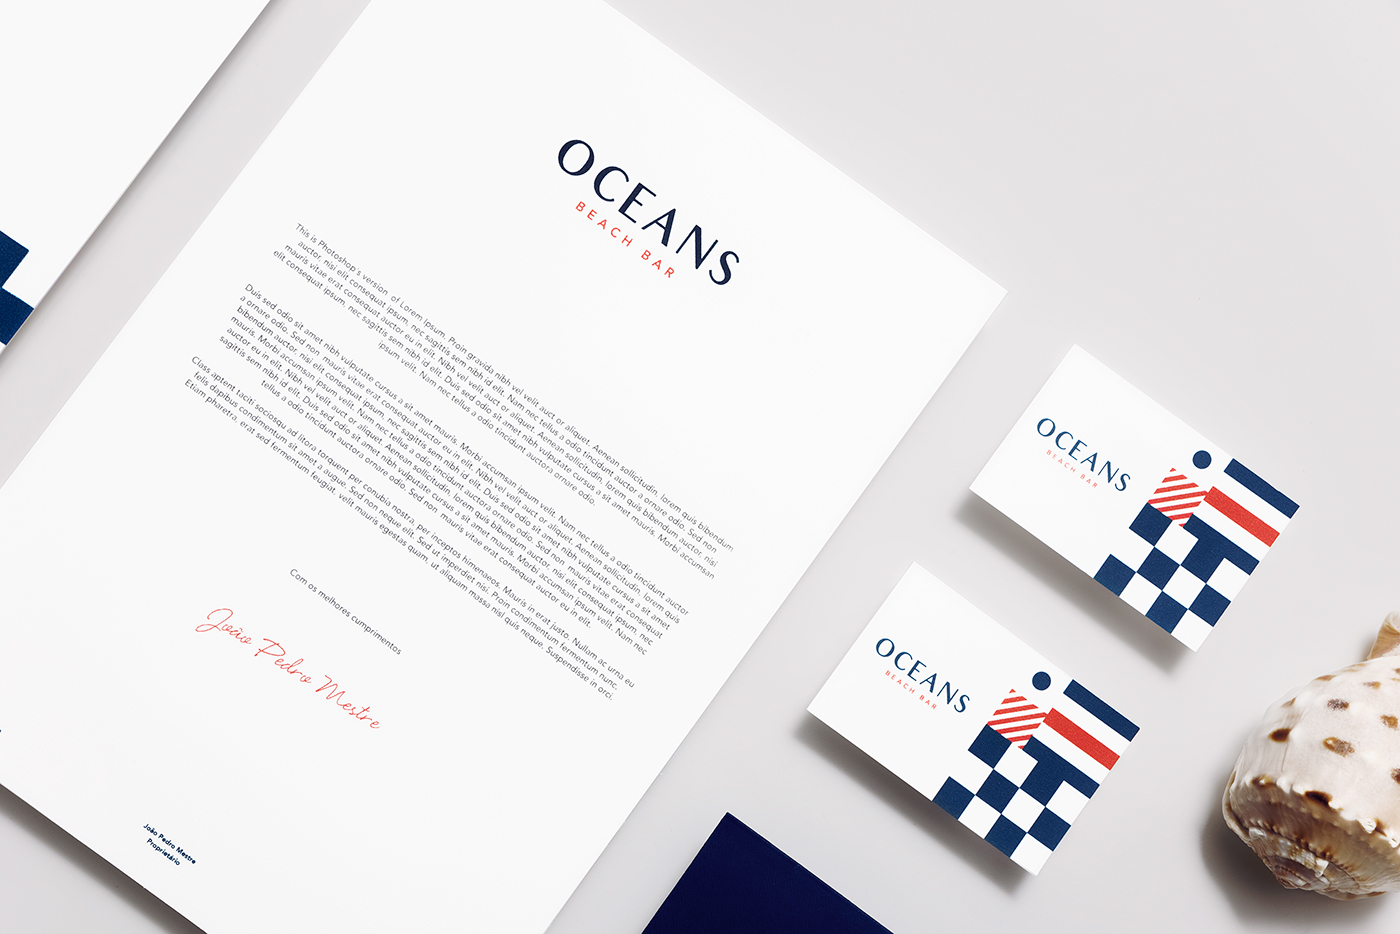 design beach sea Ocean bar graphic typography   pattern flag summer